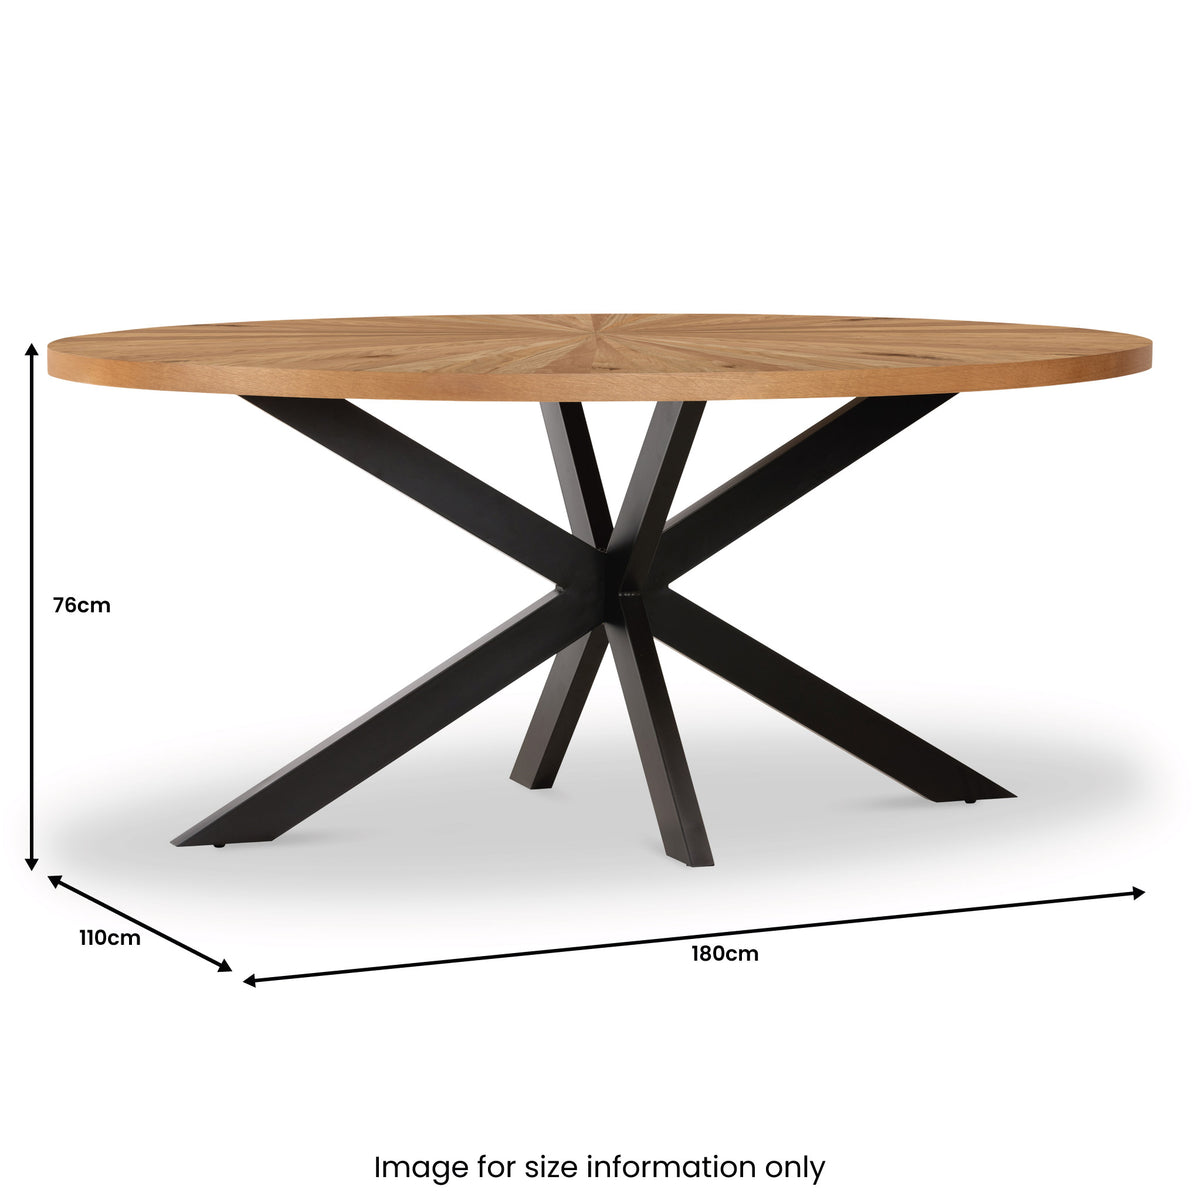 Sunburst Oak 180cm Ellipse Dining Table dimensions